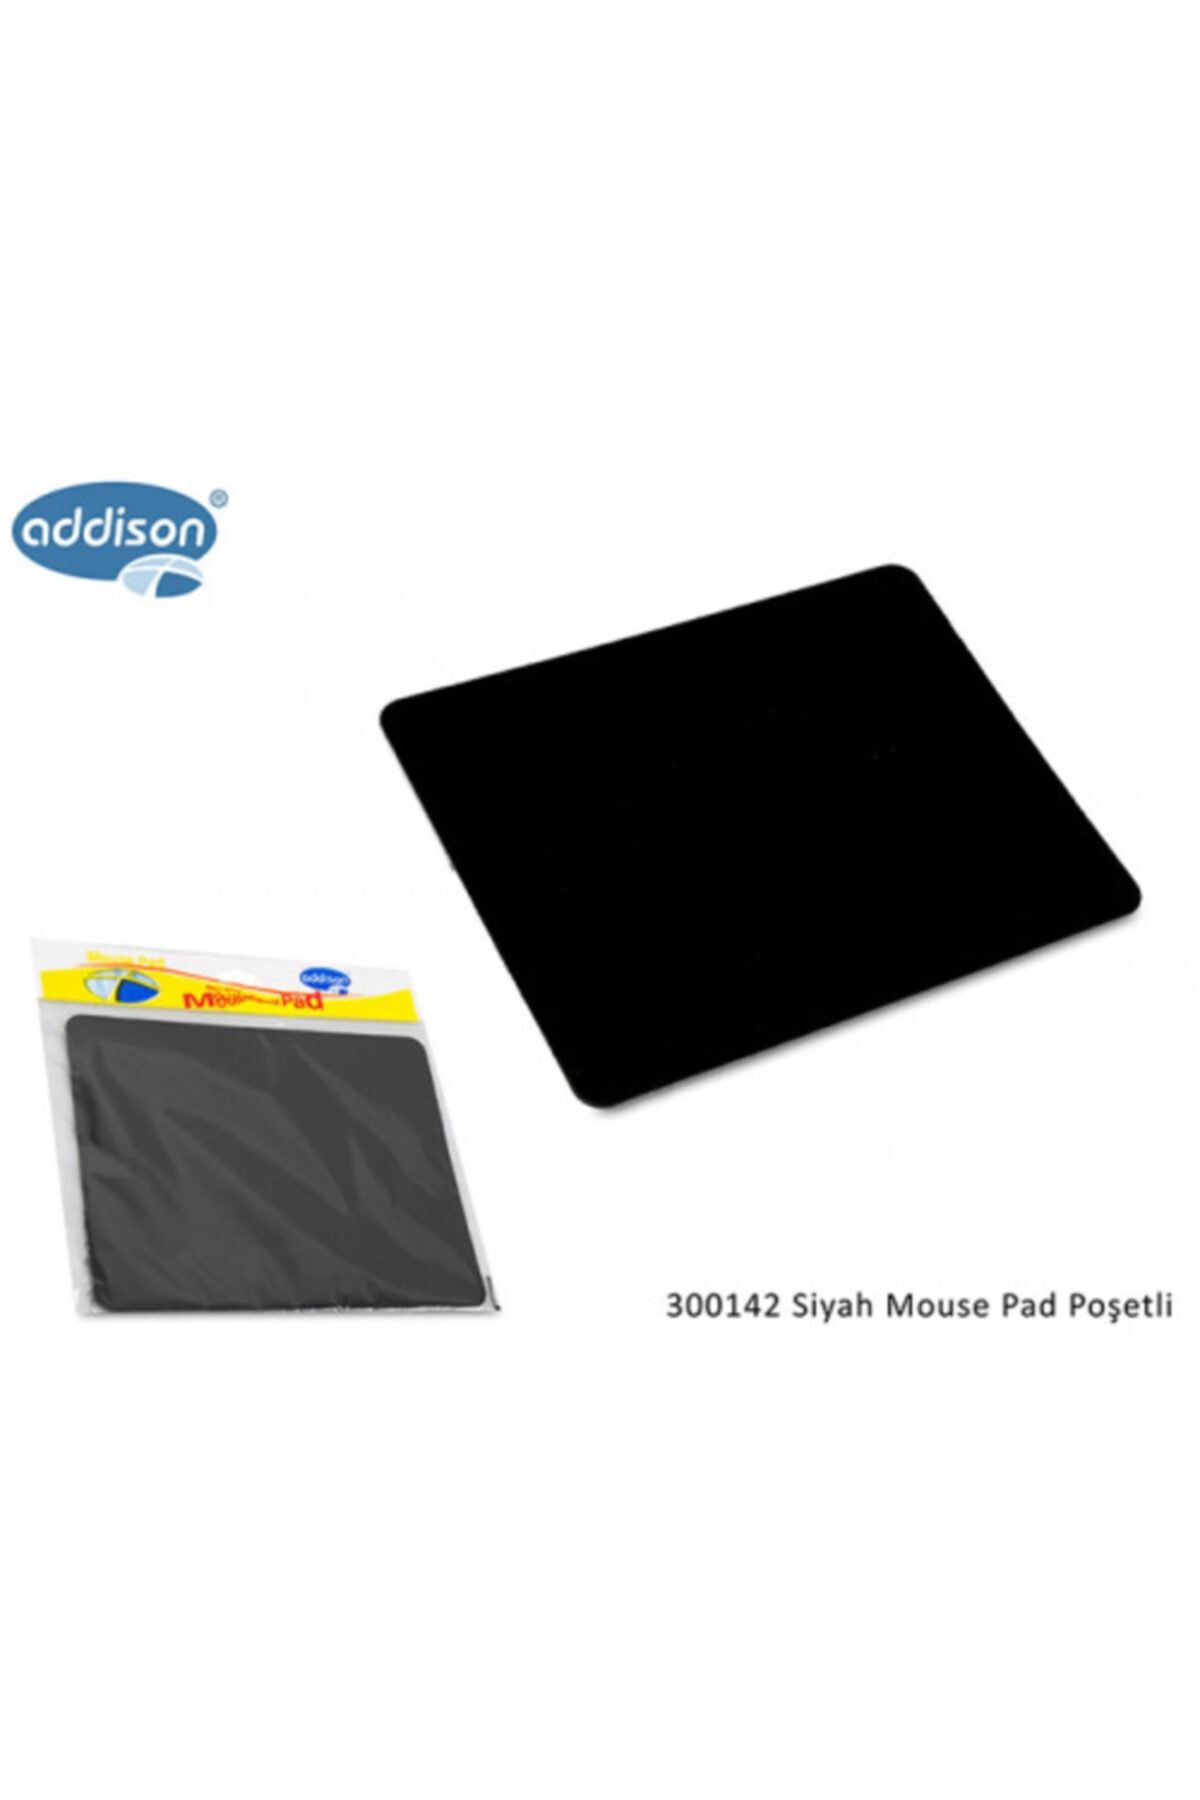 Addison Siyah Mouse Pad 300142